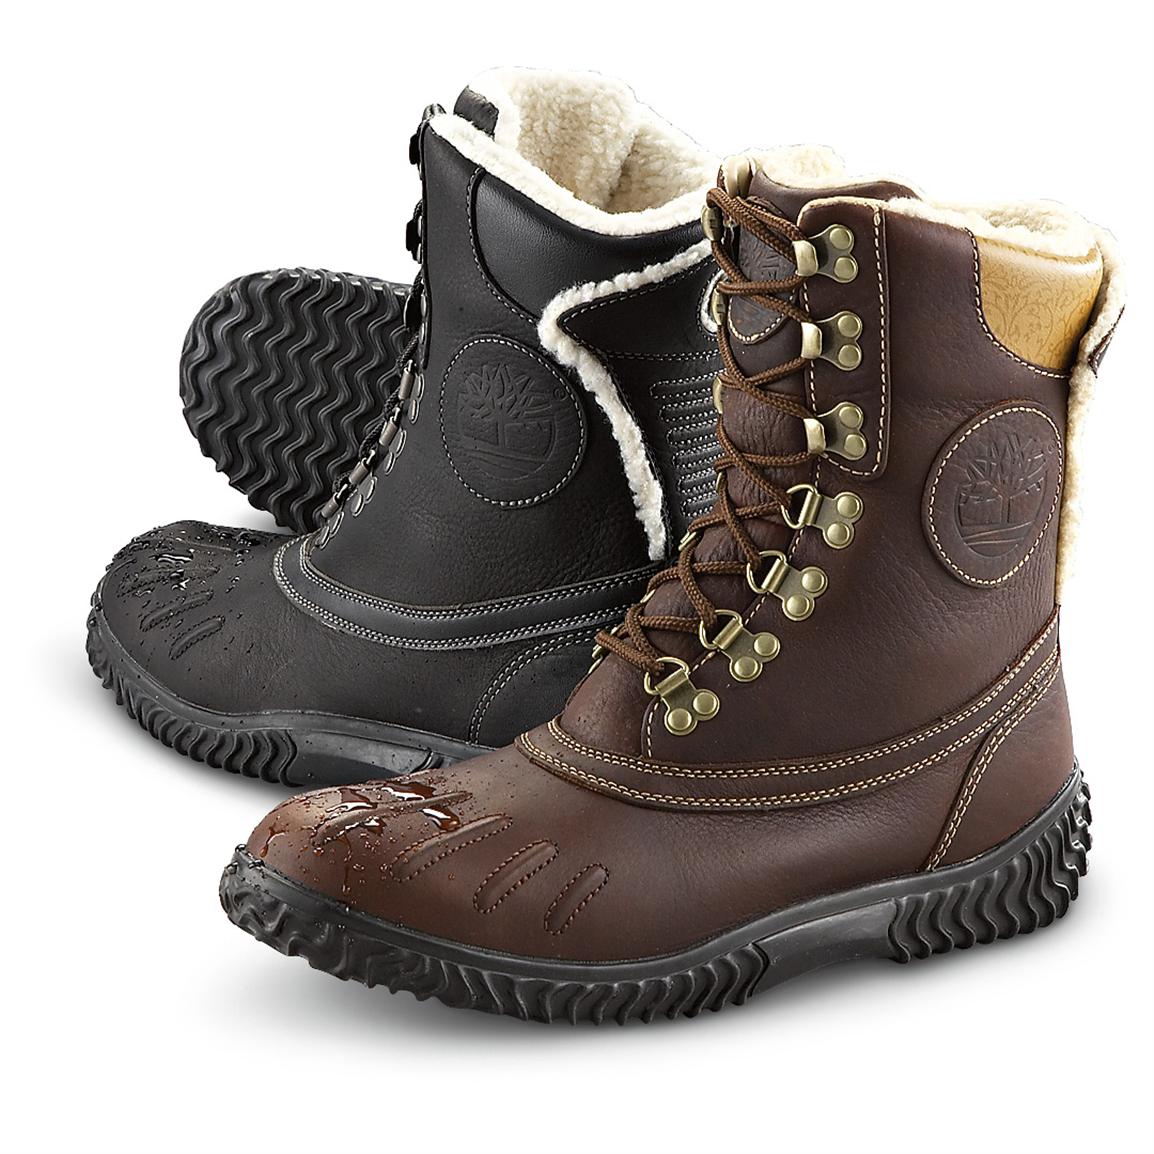 Men's TimberlandÂ® Waterproof Pak Boots - 146091, Winter & Snow Boots at Sportsman's Guide